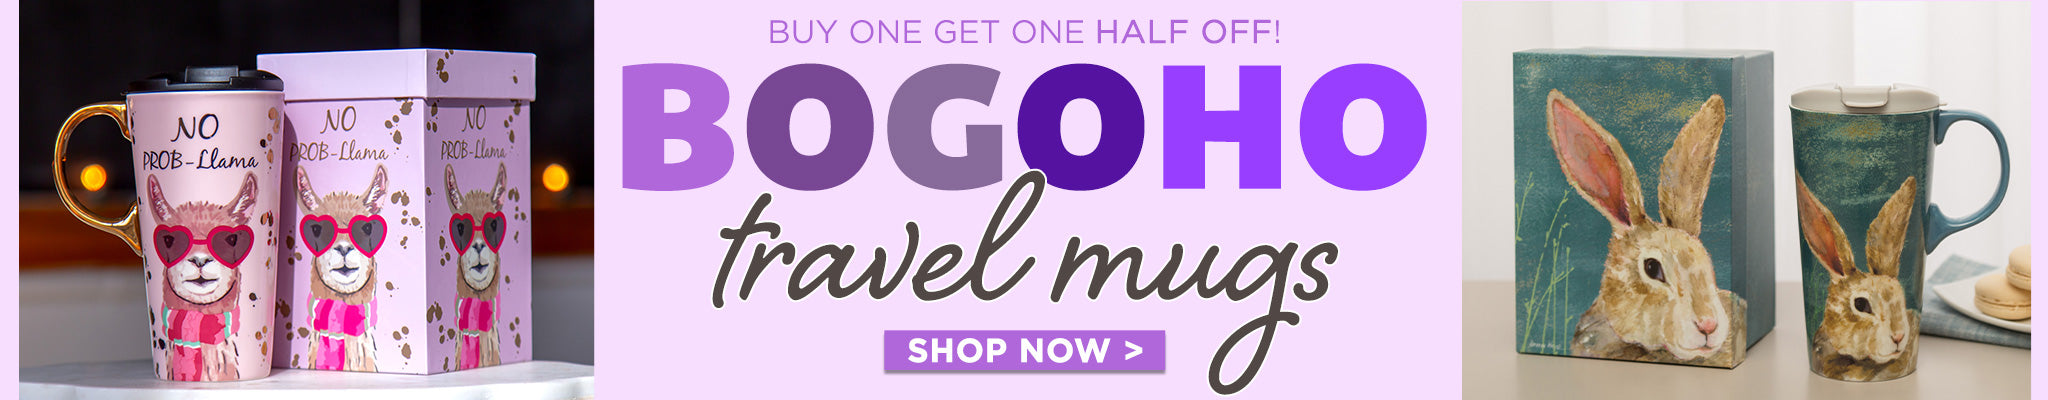 Buy 1, Get 1 Half Off on select Travel Mugs!